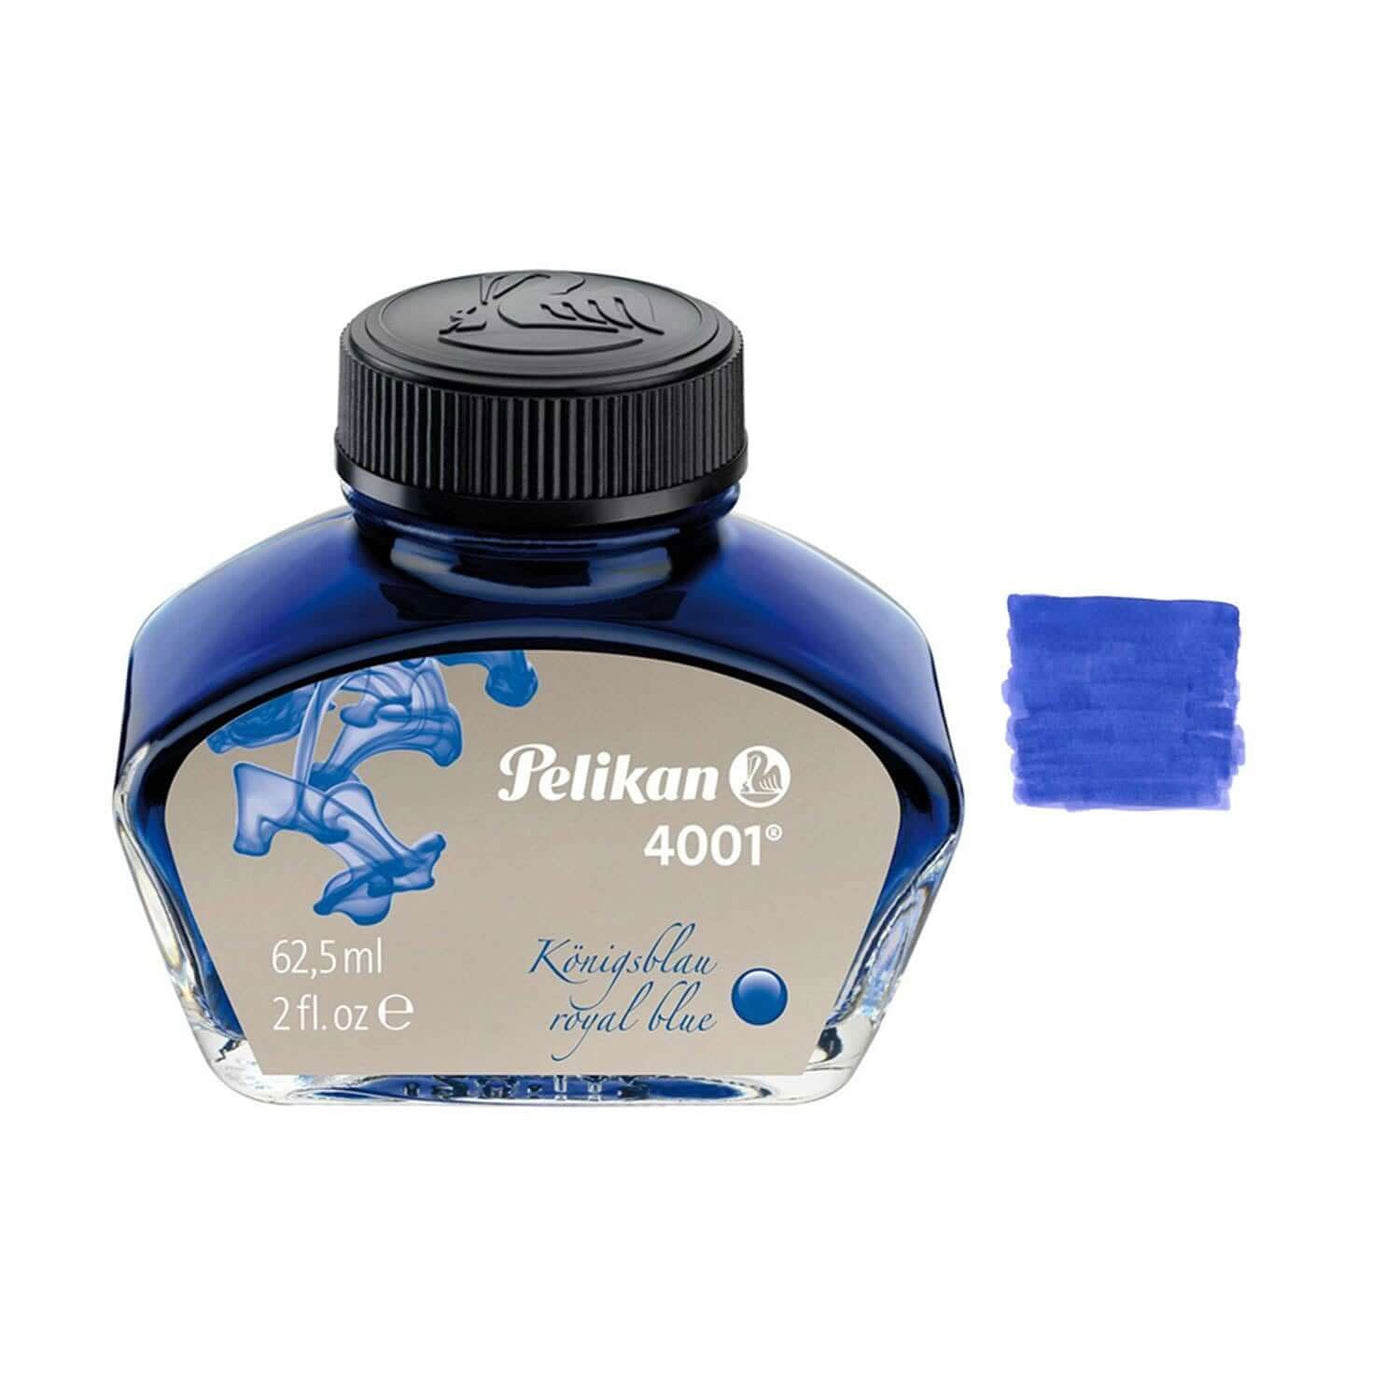 Pelikan 4001 Ink, Royal Blue - 62.5ml